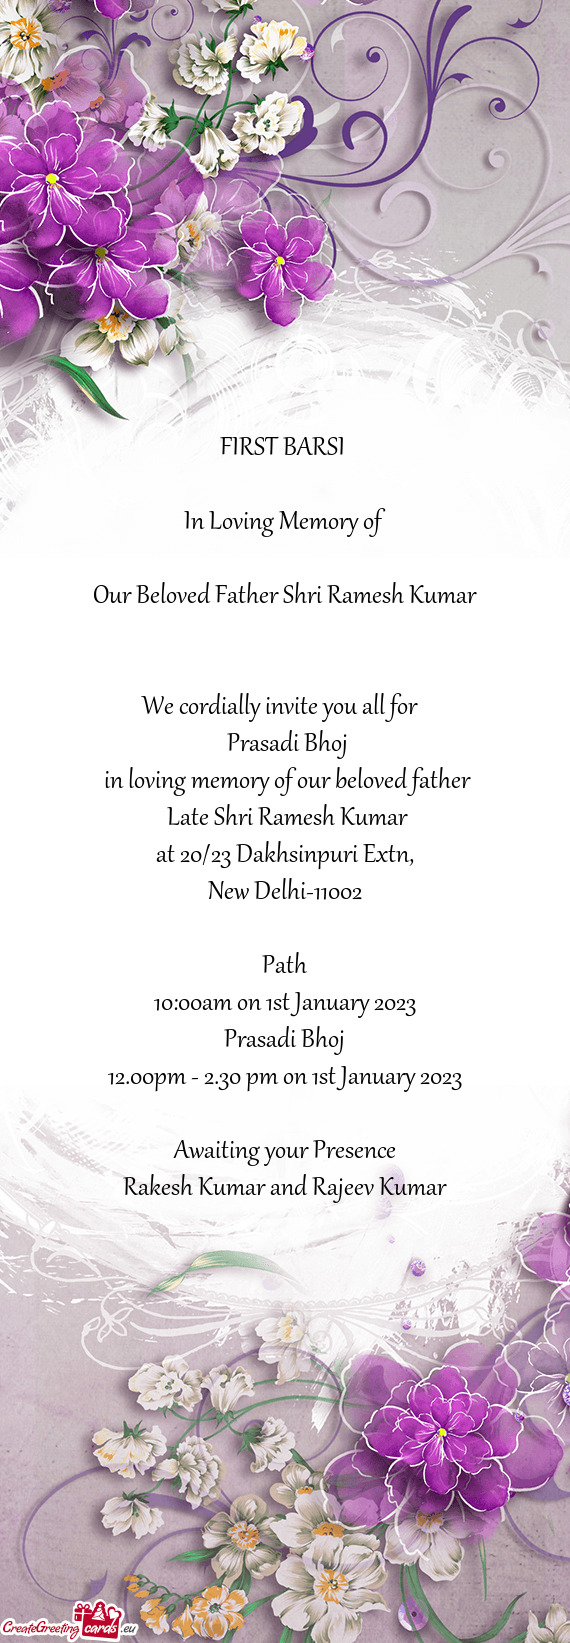 Our Beloved Father Shri Ramesh Kumar